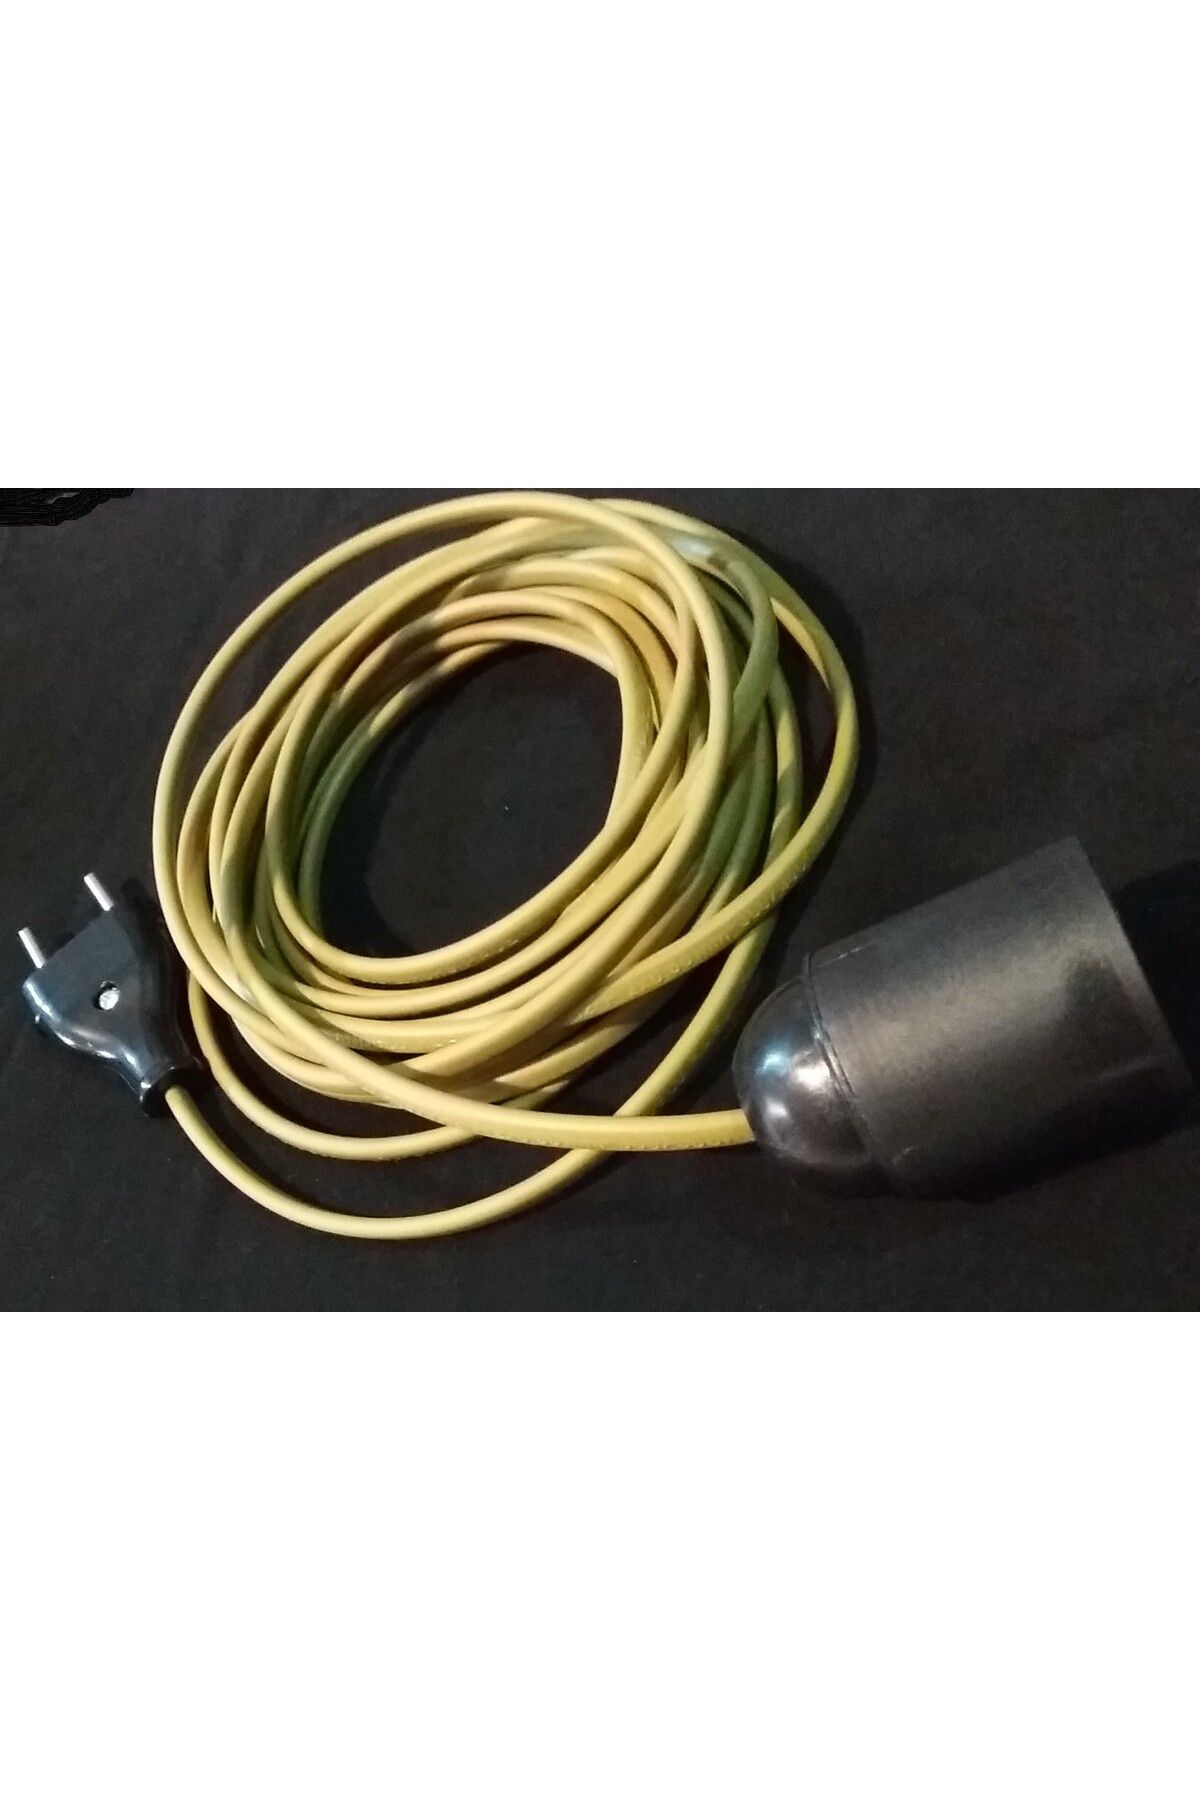 Elektrikçim 7 metre, yeşil siyah lamba uzatma kablosu